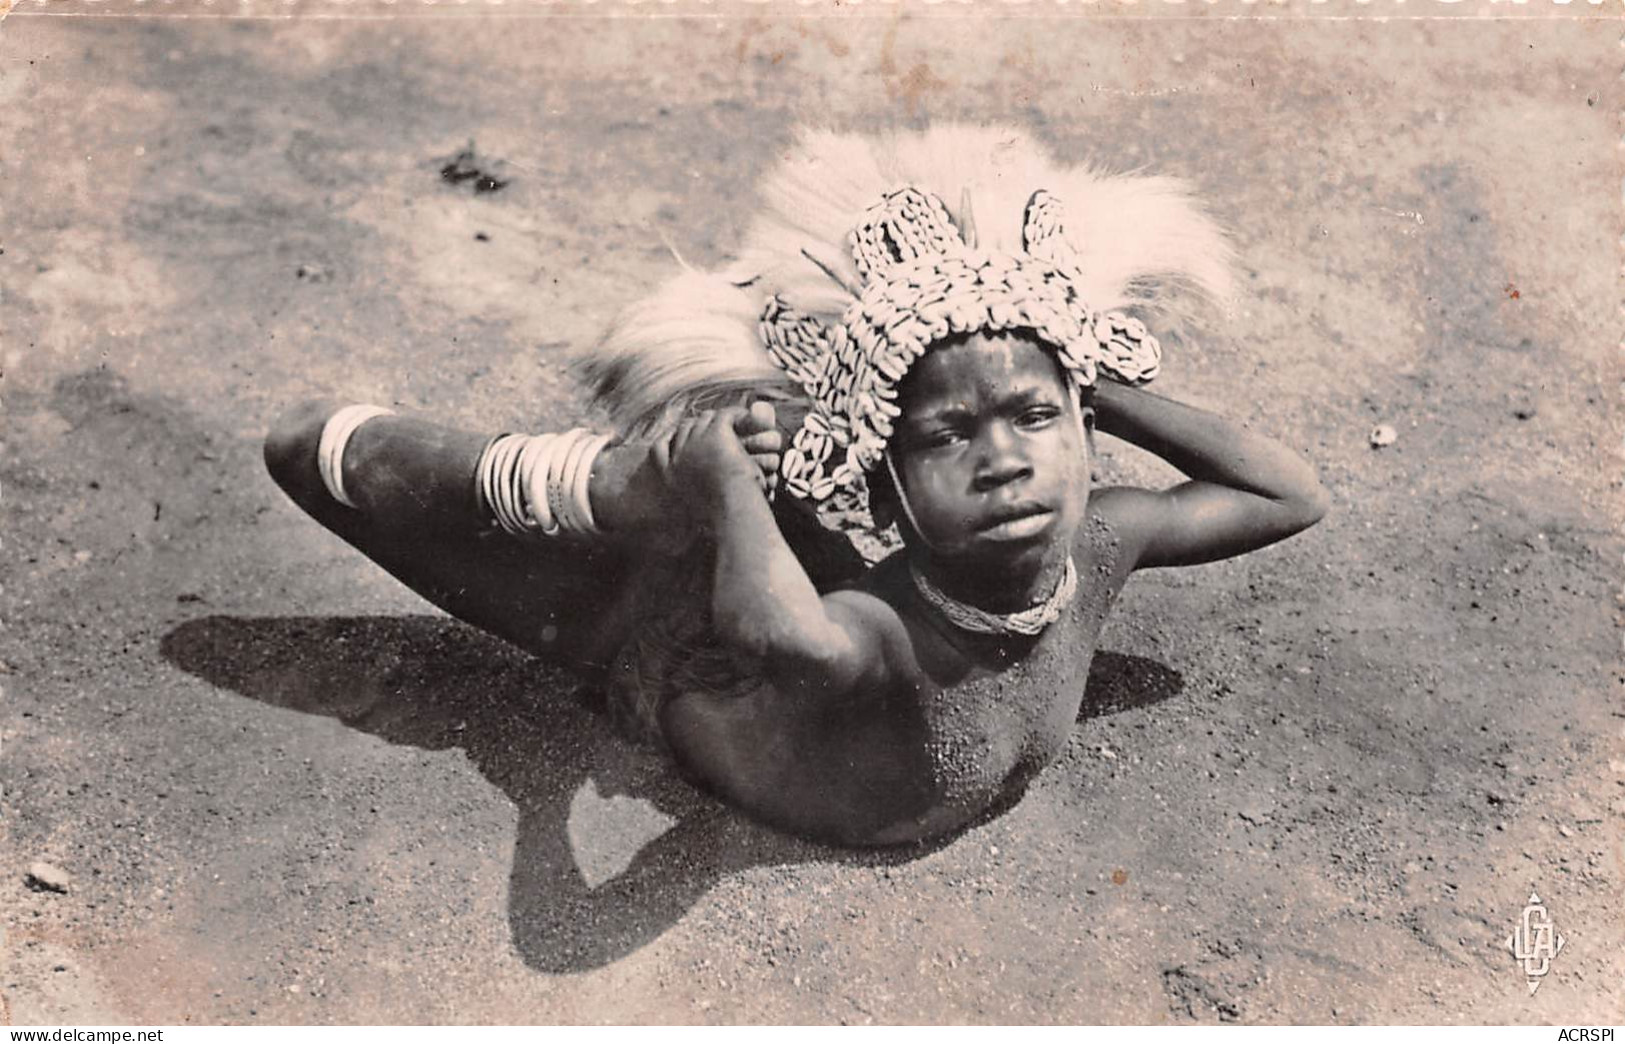 TCHAD Région De Daba Dance D'initiation  éditions Africaine N'DJAMENA (Scans R/V) N° 3 \MP7109 - Tchad